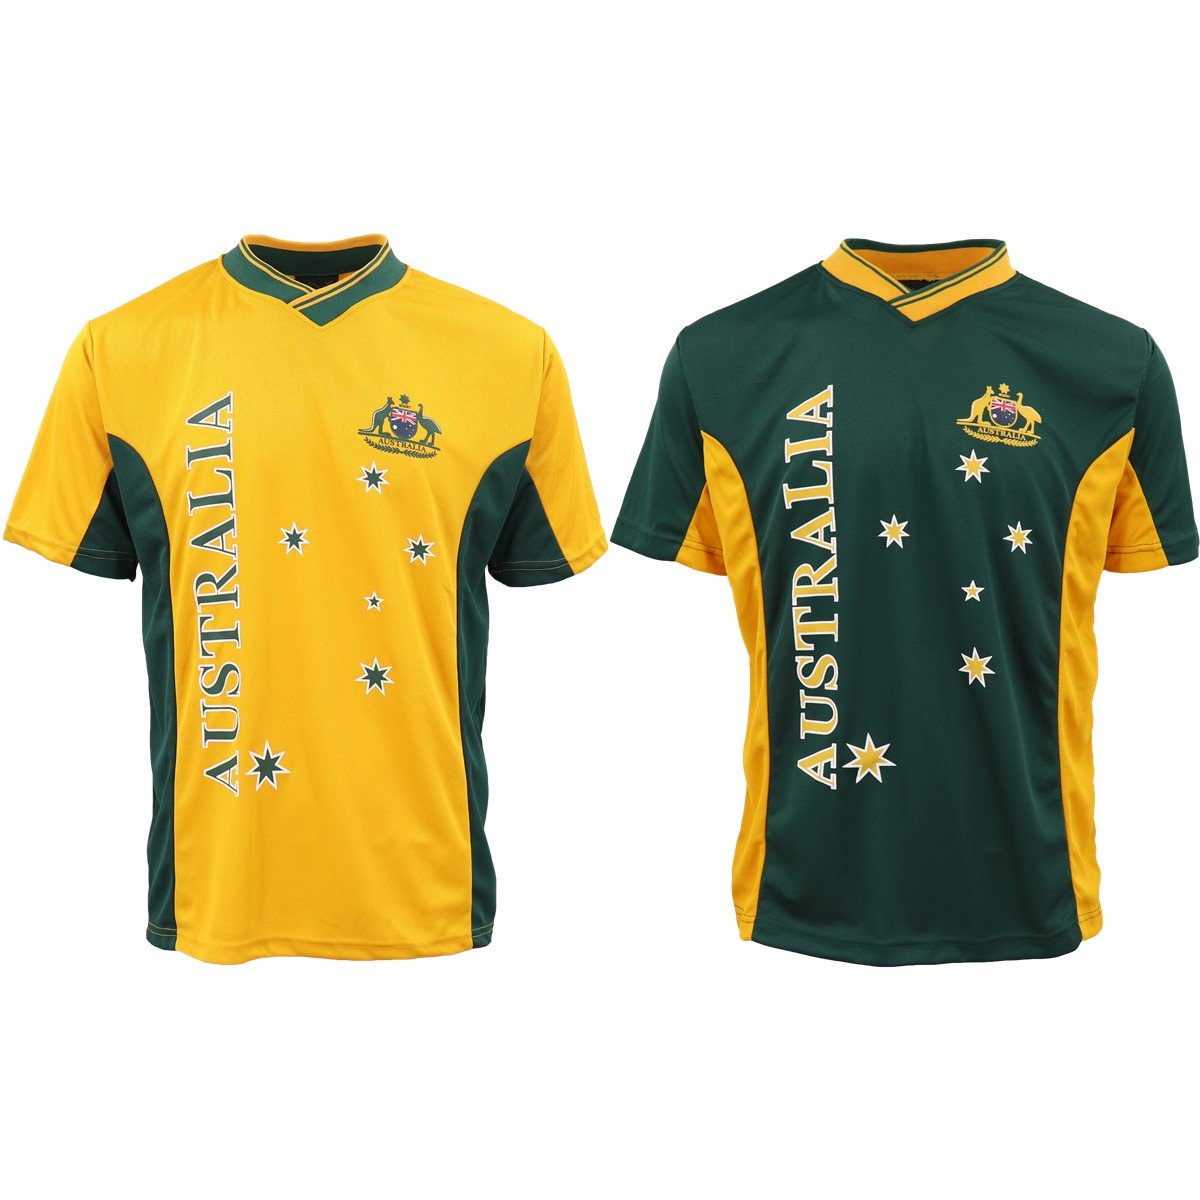 Adults Kids Men's Sports Soccer Rugby Jersy T Shirt Australia Day Polo Souvenir, Green, XL